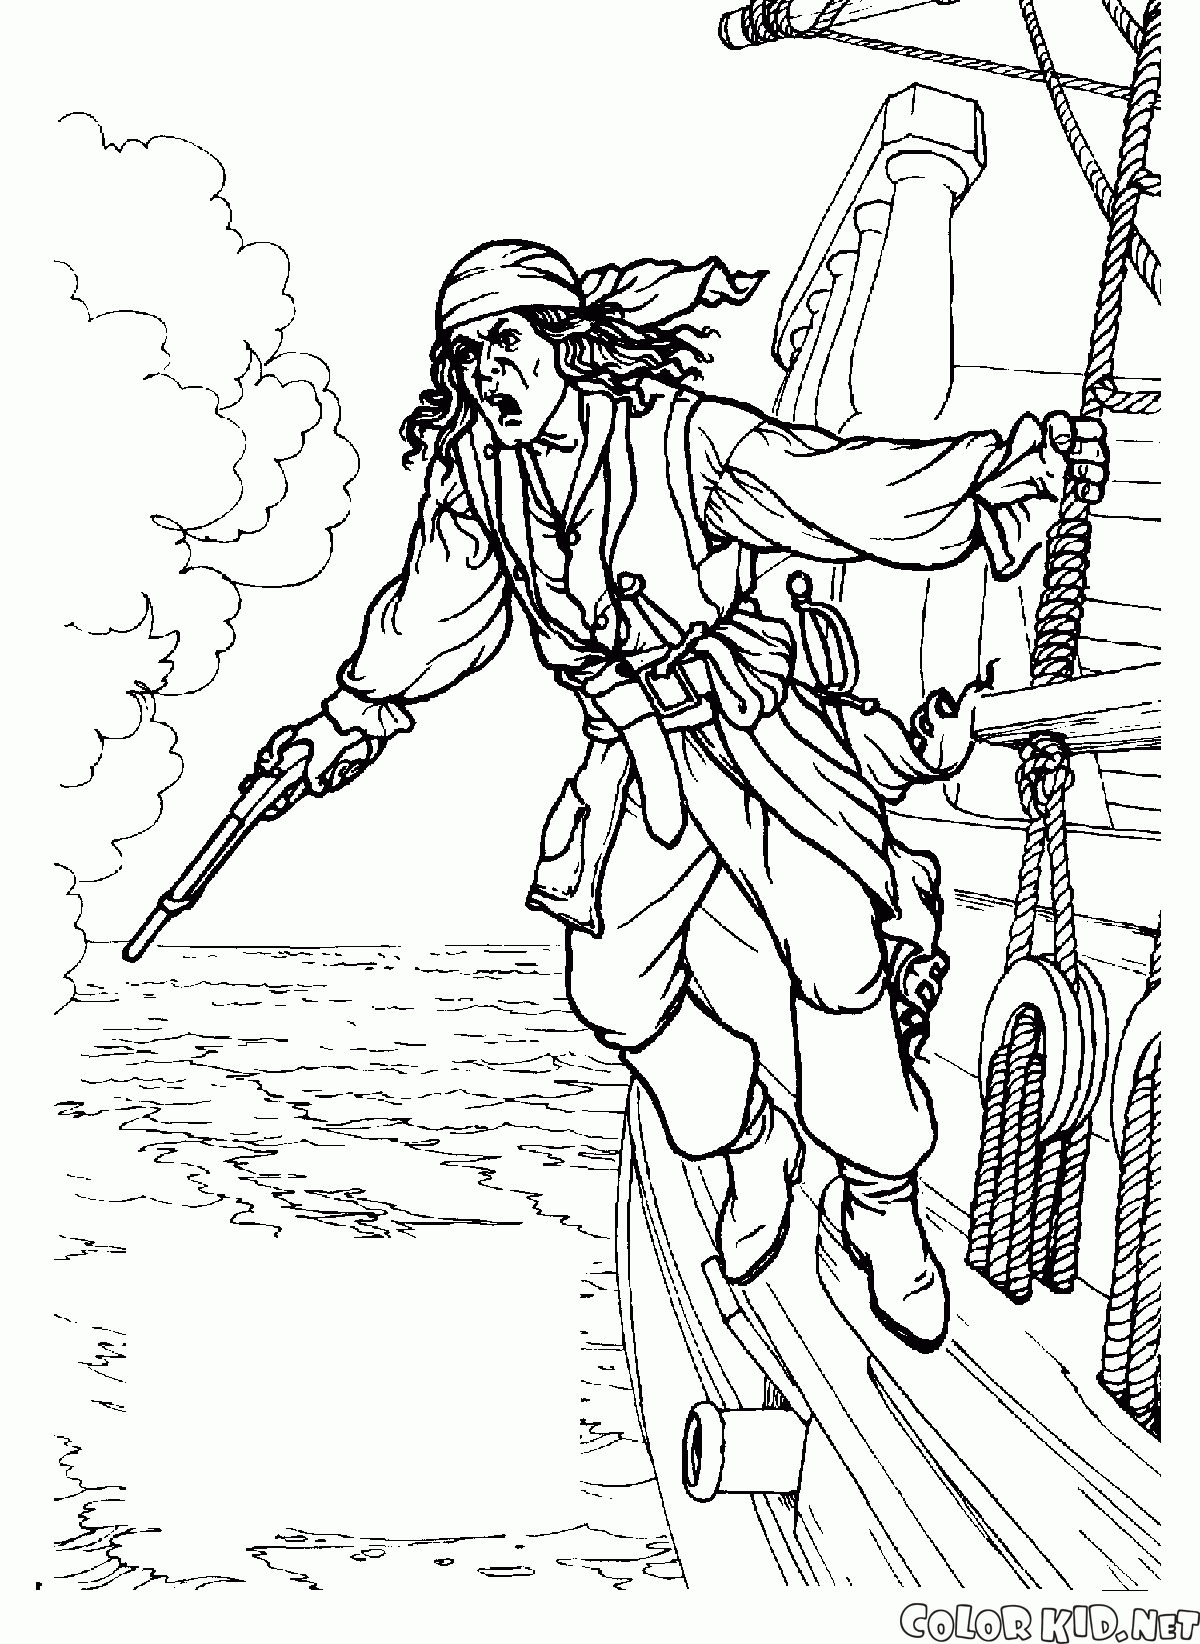 Coloring page - Pirate gunsmith